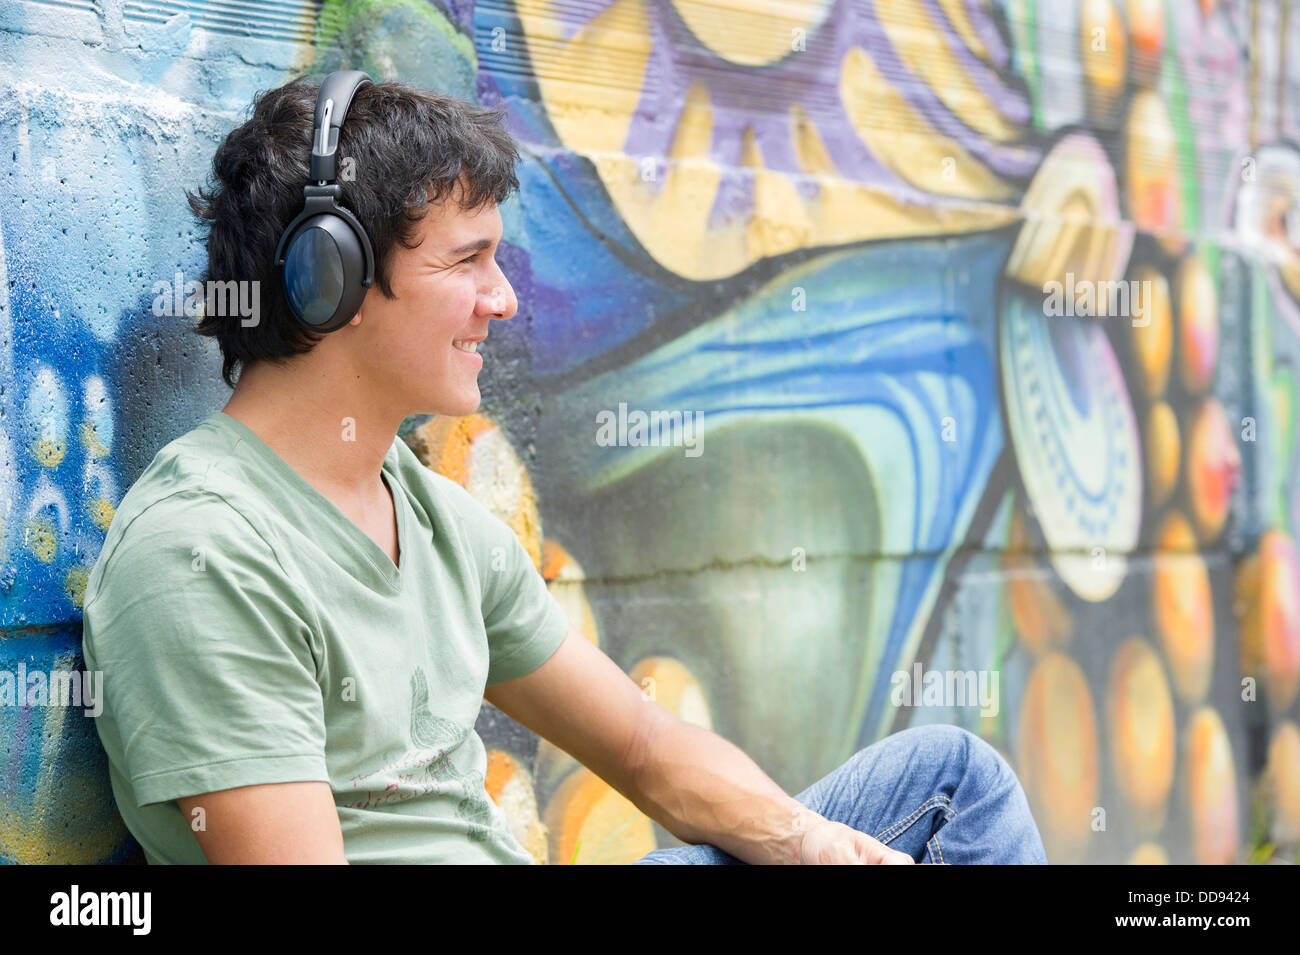 Hispanic man listening to headphones Stock Photo